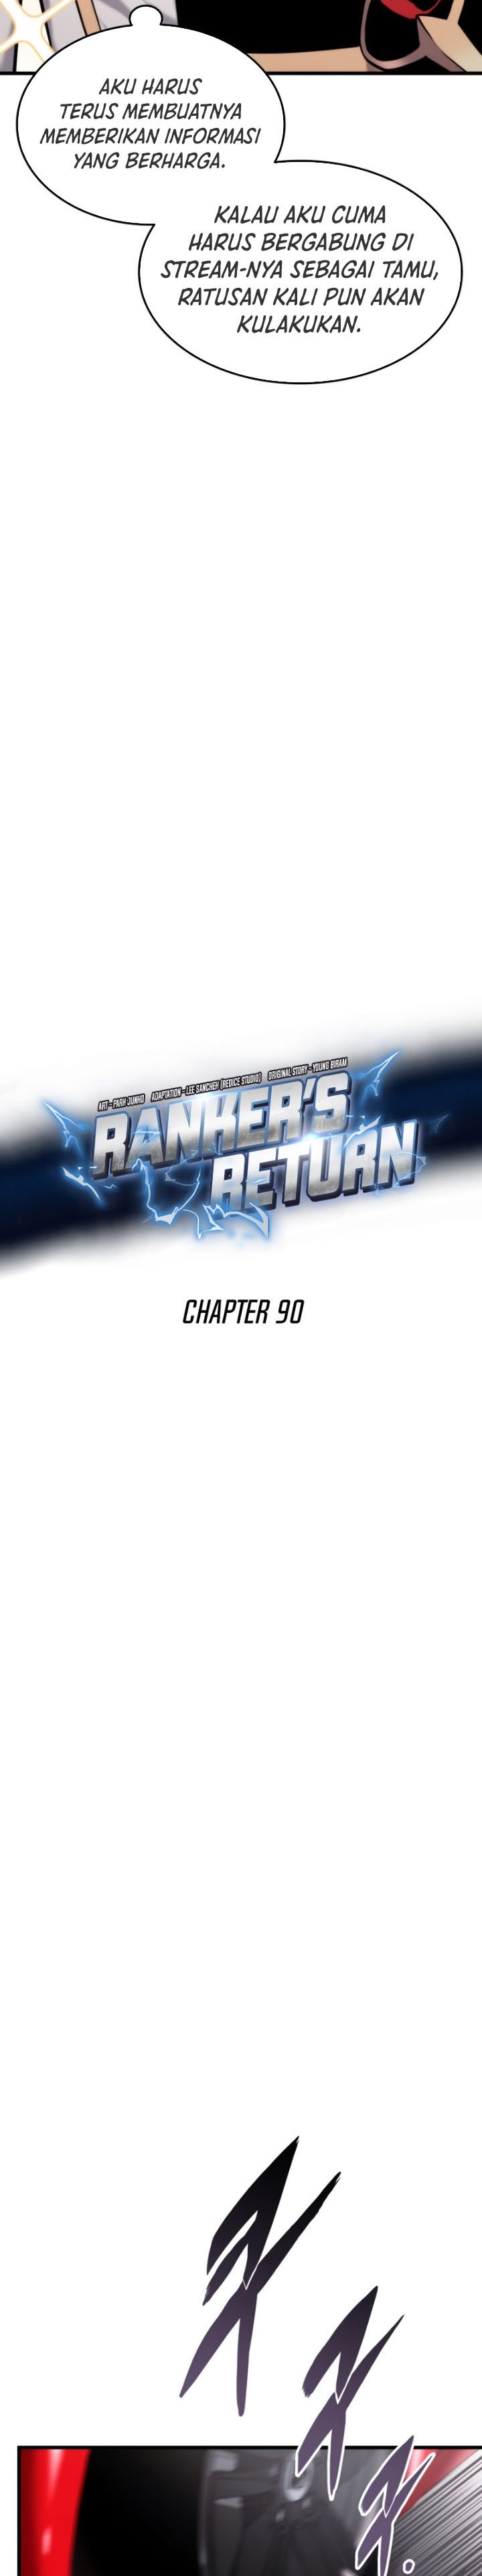 Ranker’s Return (Remake) Chapter 90